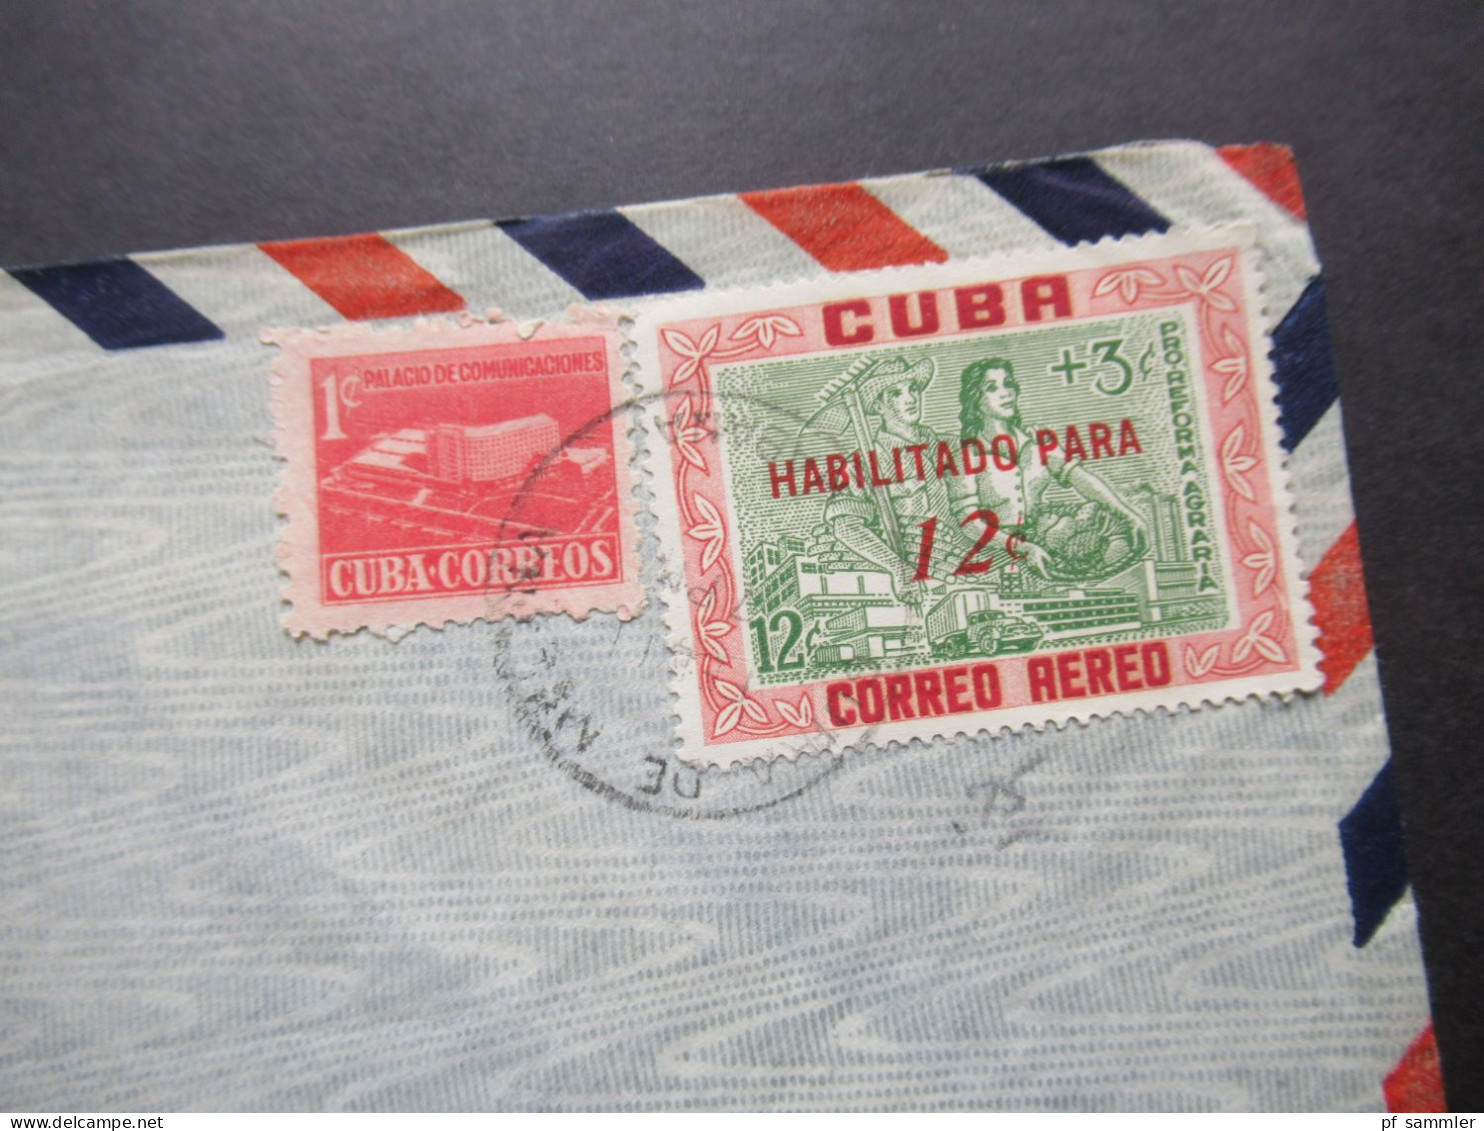 Kuba / Cuba Habana 1958 Air Mail 2 dekorative Umschläge Louisiana Hatcheries mit Küken und 1x La Isla de Cuba S.A.